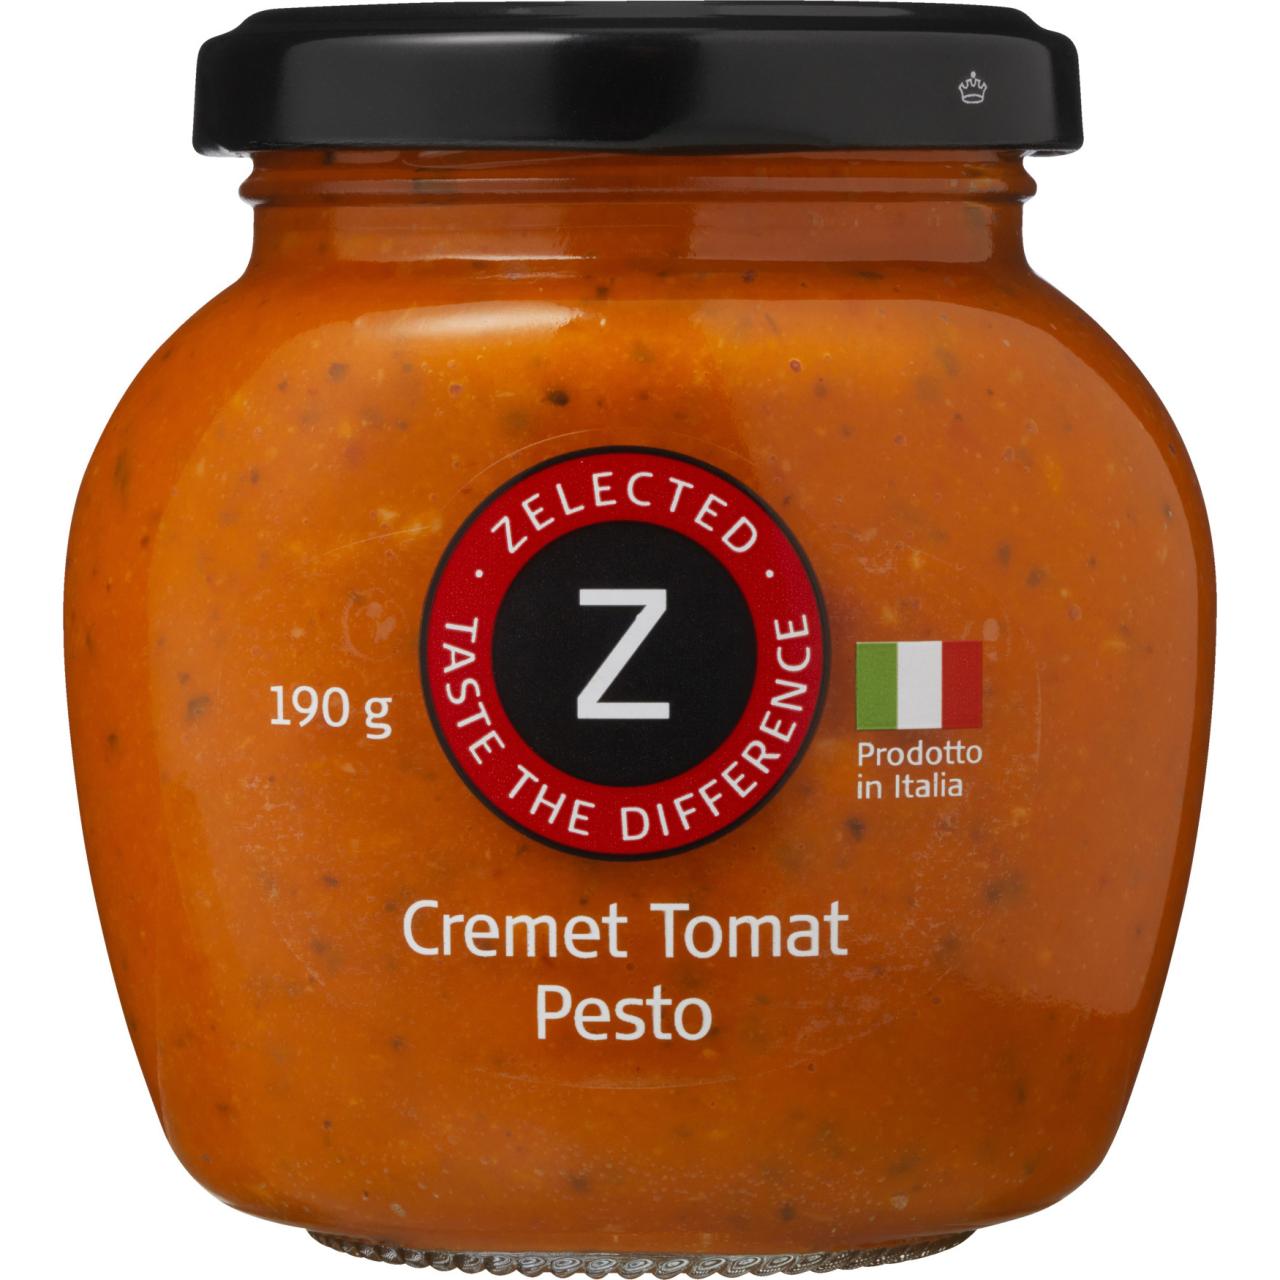 Zelected Cremet Tomat Pesto 190g